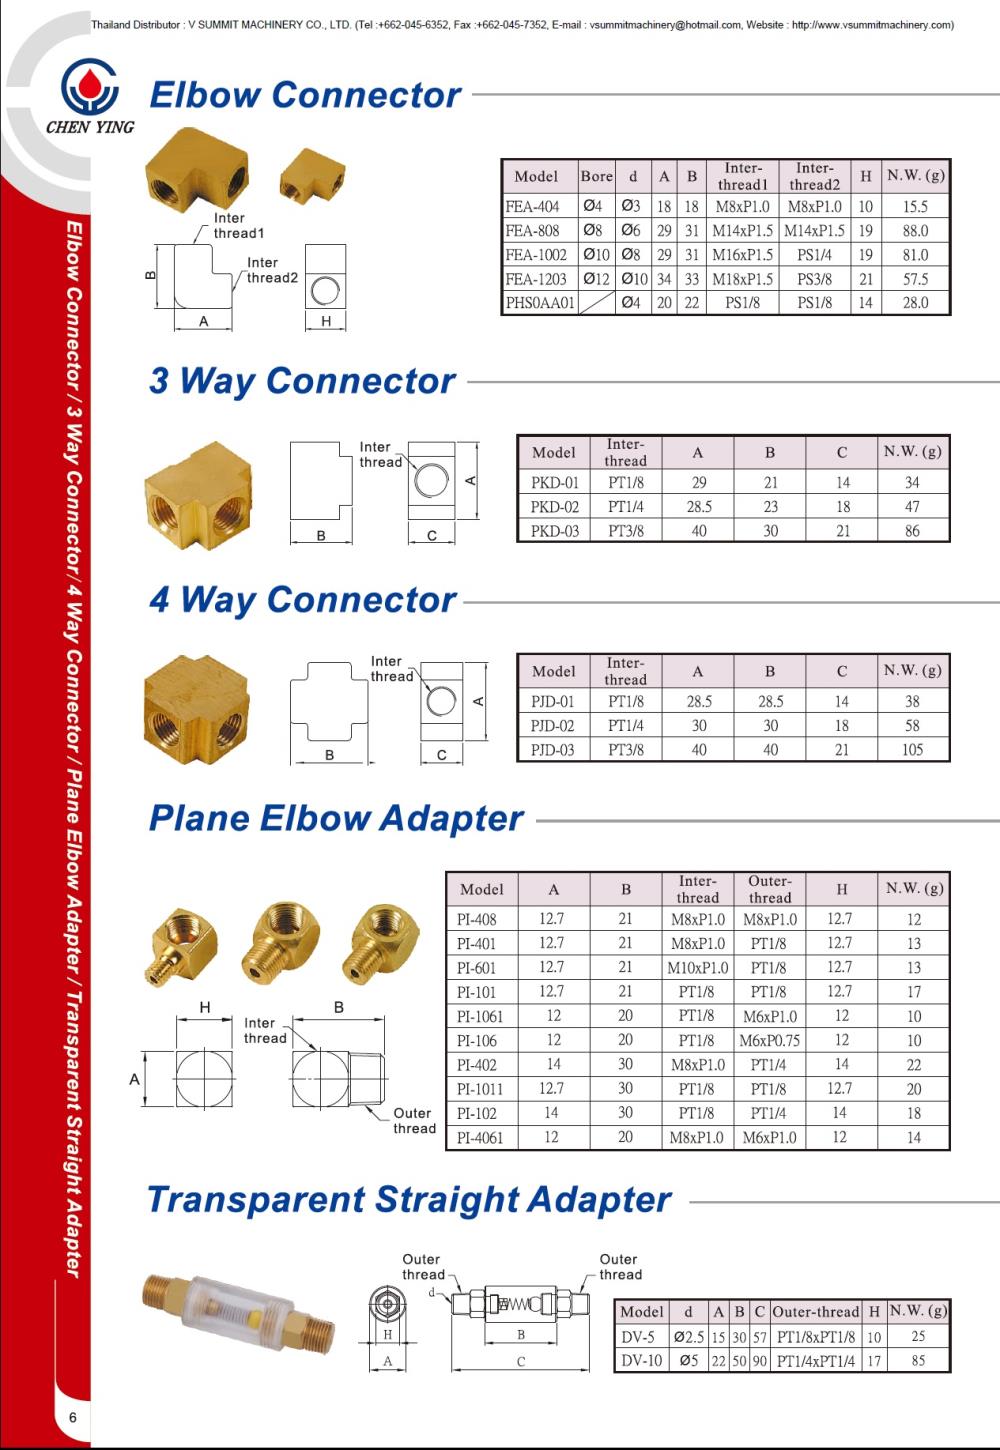 Elbow Connector, ข้อต่อ, ข้อต่อทองเหลือง, ข้อต่องอ, ข้อต่องอทองเหลือง, ข้อต่อแอลทองเหลือง, ข้อต่อ L ทองเหลือง, ข้อต่อแอล, ข้อต่อ L